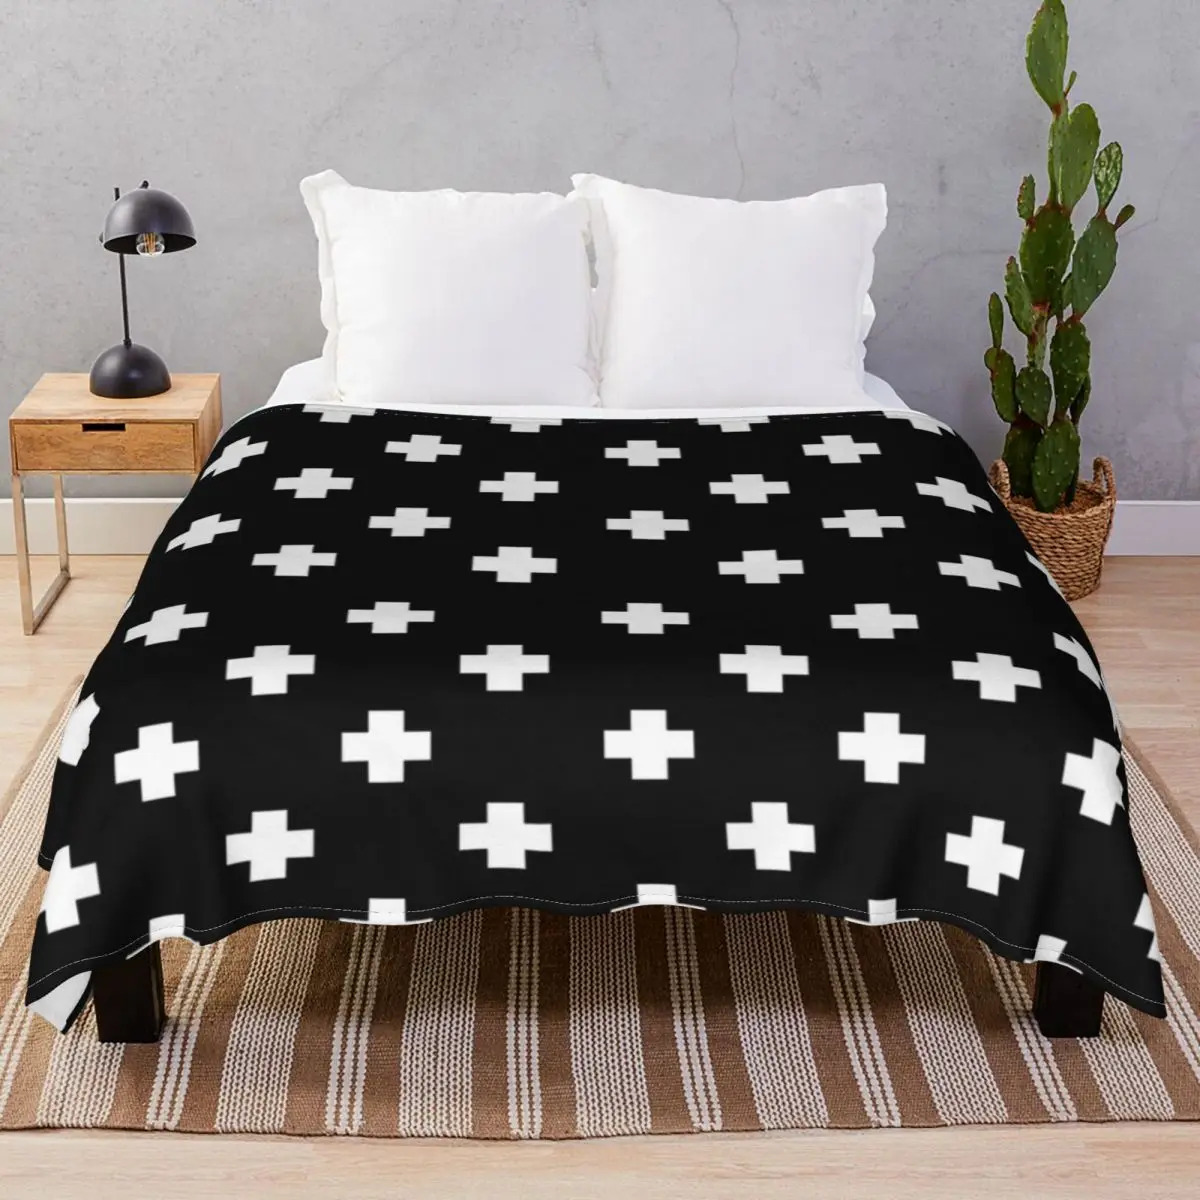 

Swiss Cross Pattern Blankets Velvet Plush Decoration Super Warm Throw Blanket for Bedding Home Couch Camp Cinema